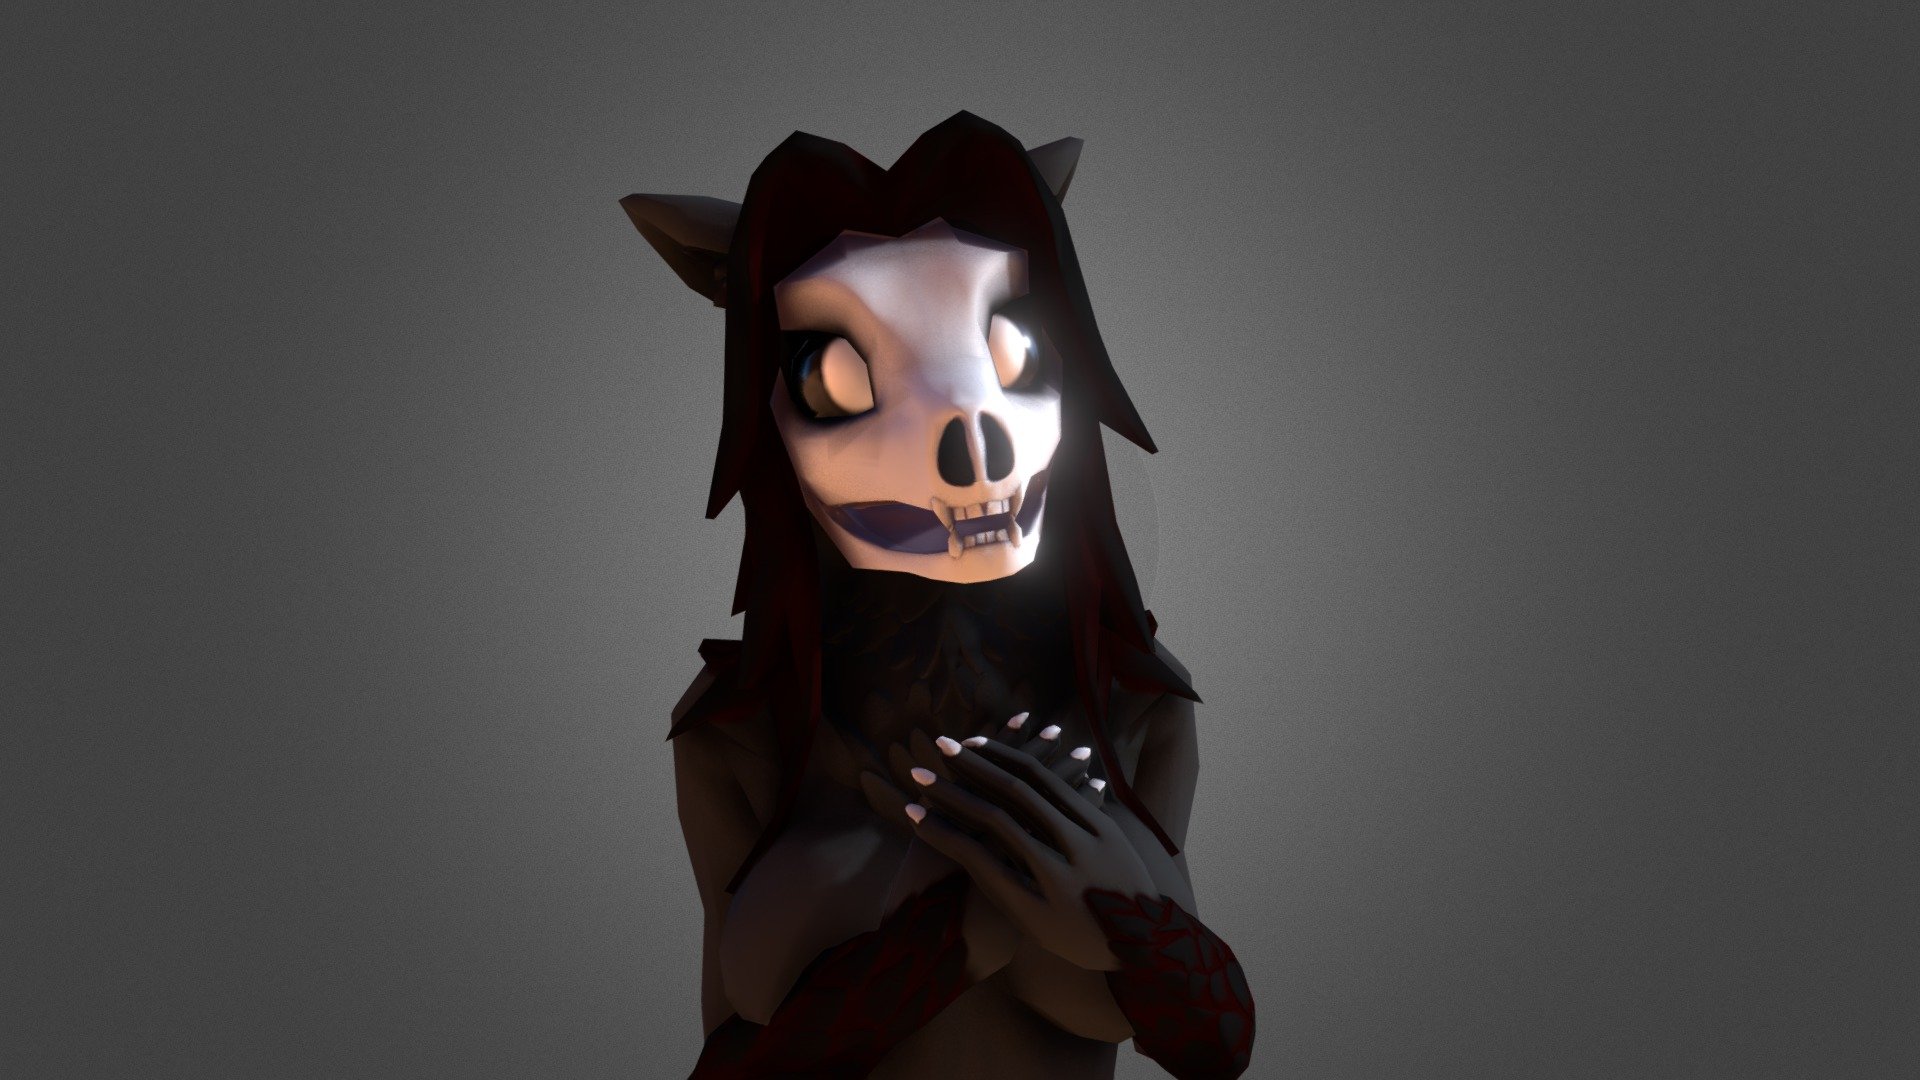 Skull Furry Model - Download Free 3D model by DamKung13 (@damkung13)  [6ec8ab5]